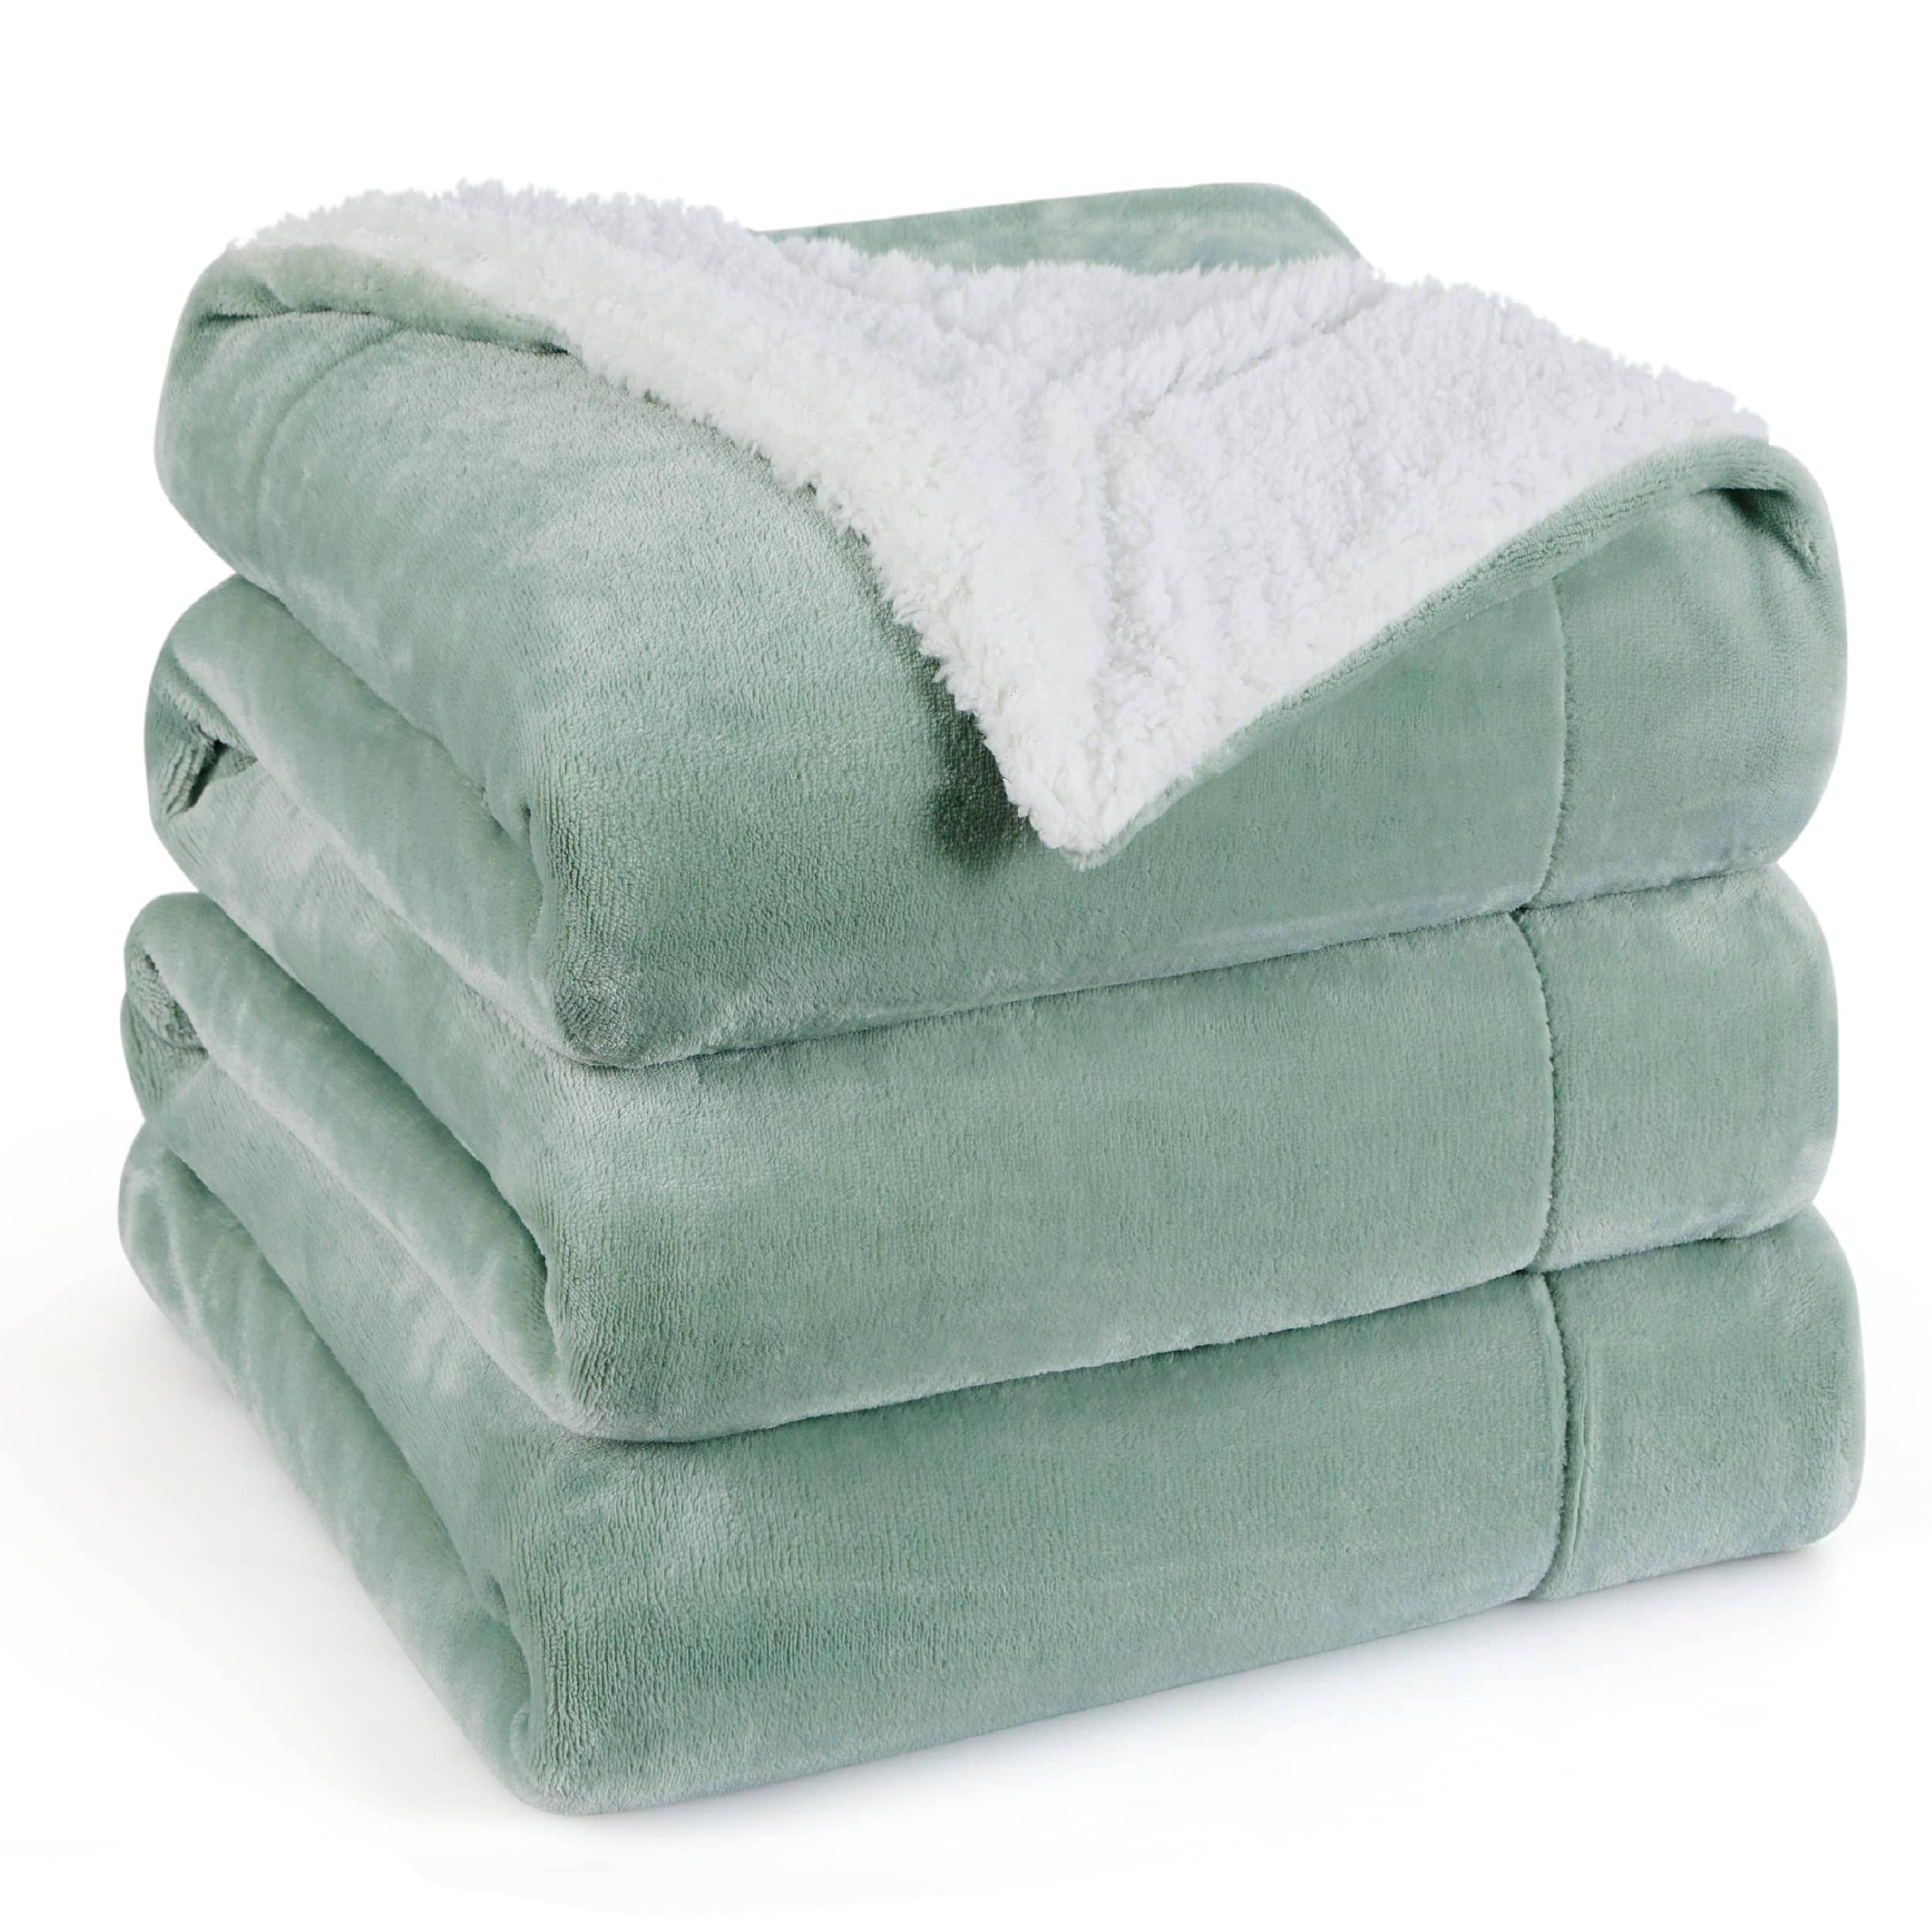 Sherpa and Fleece Reversible Blanket